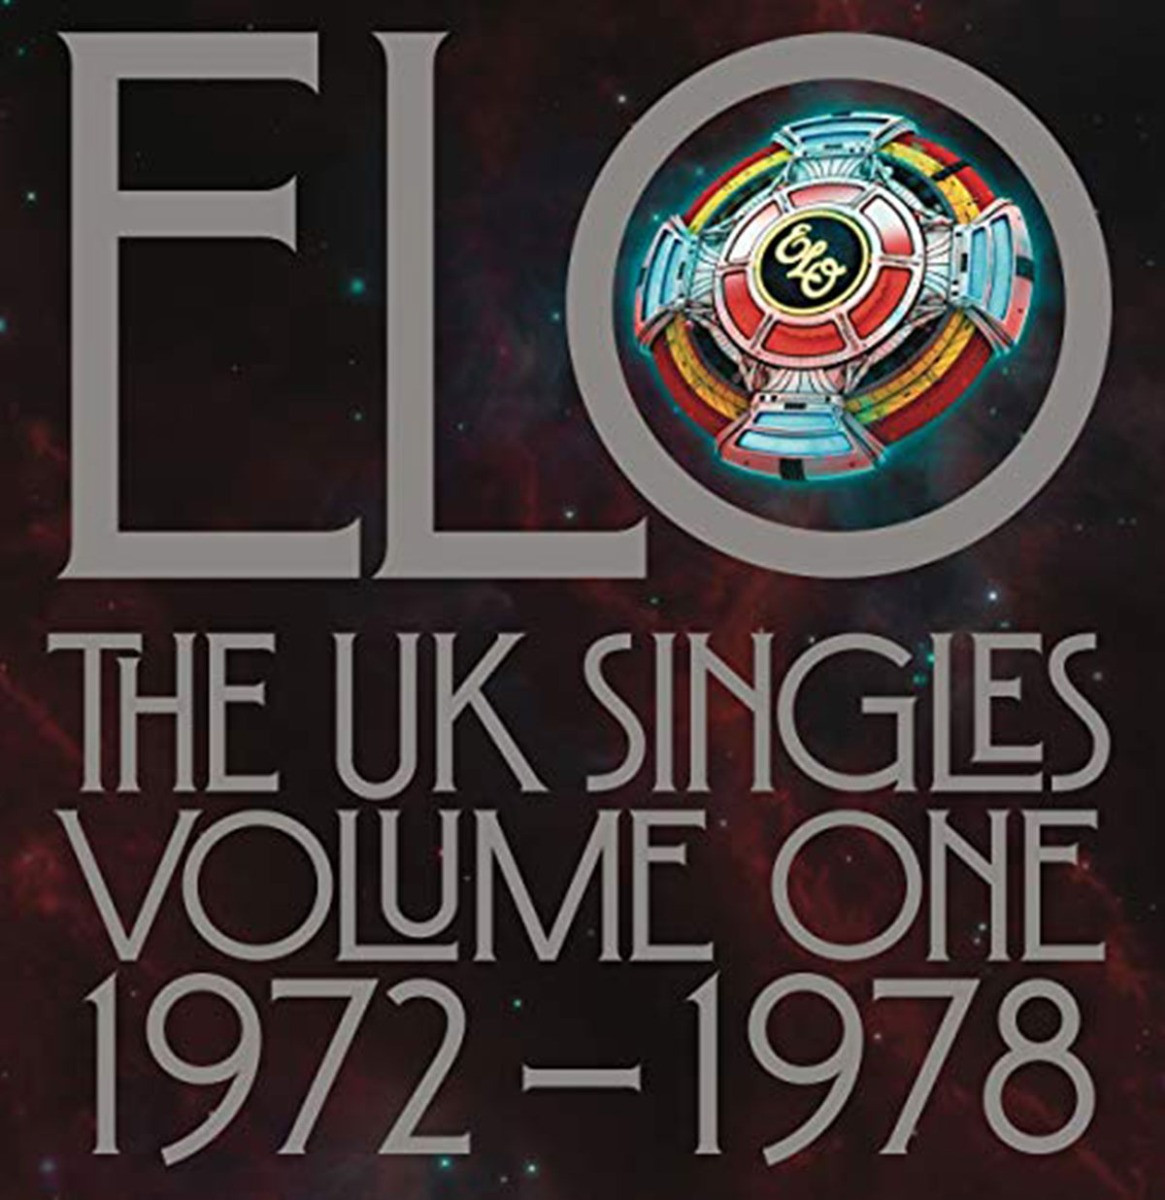 ELO - The UK Singles Volume One 1972-1978 16x7"inch Boxset